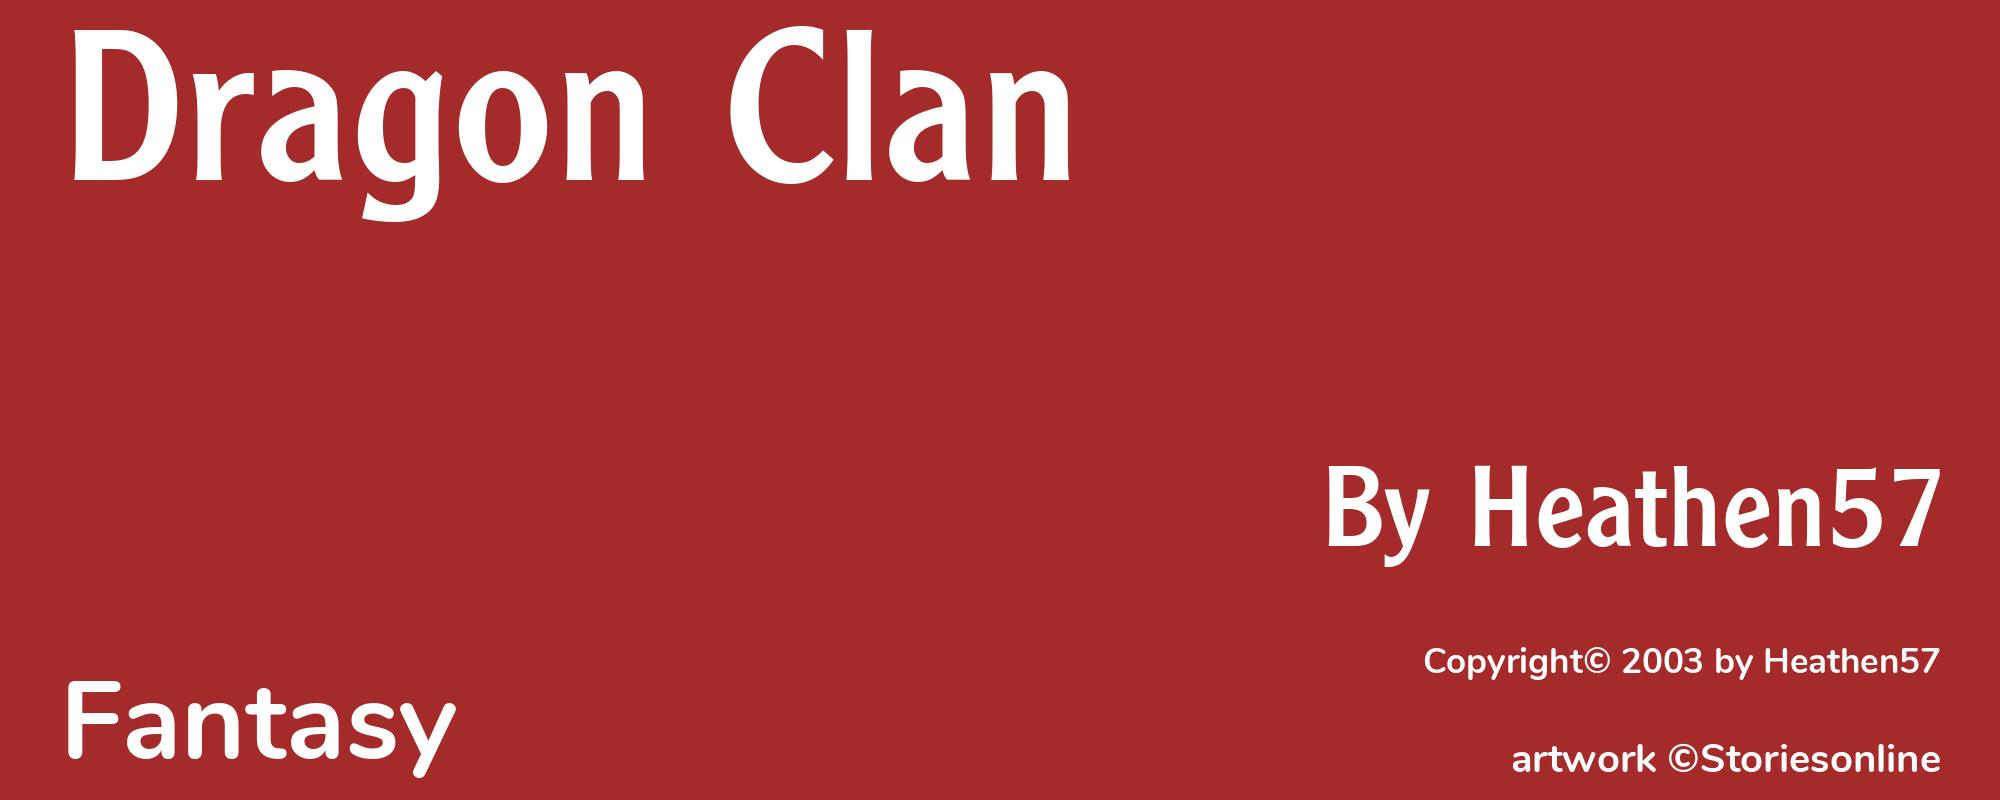 Dragon Clan - Cover